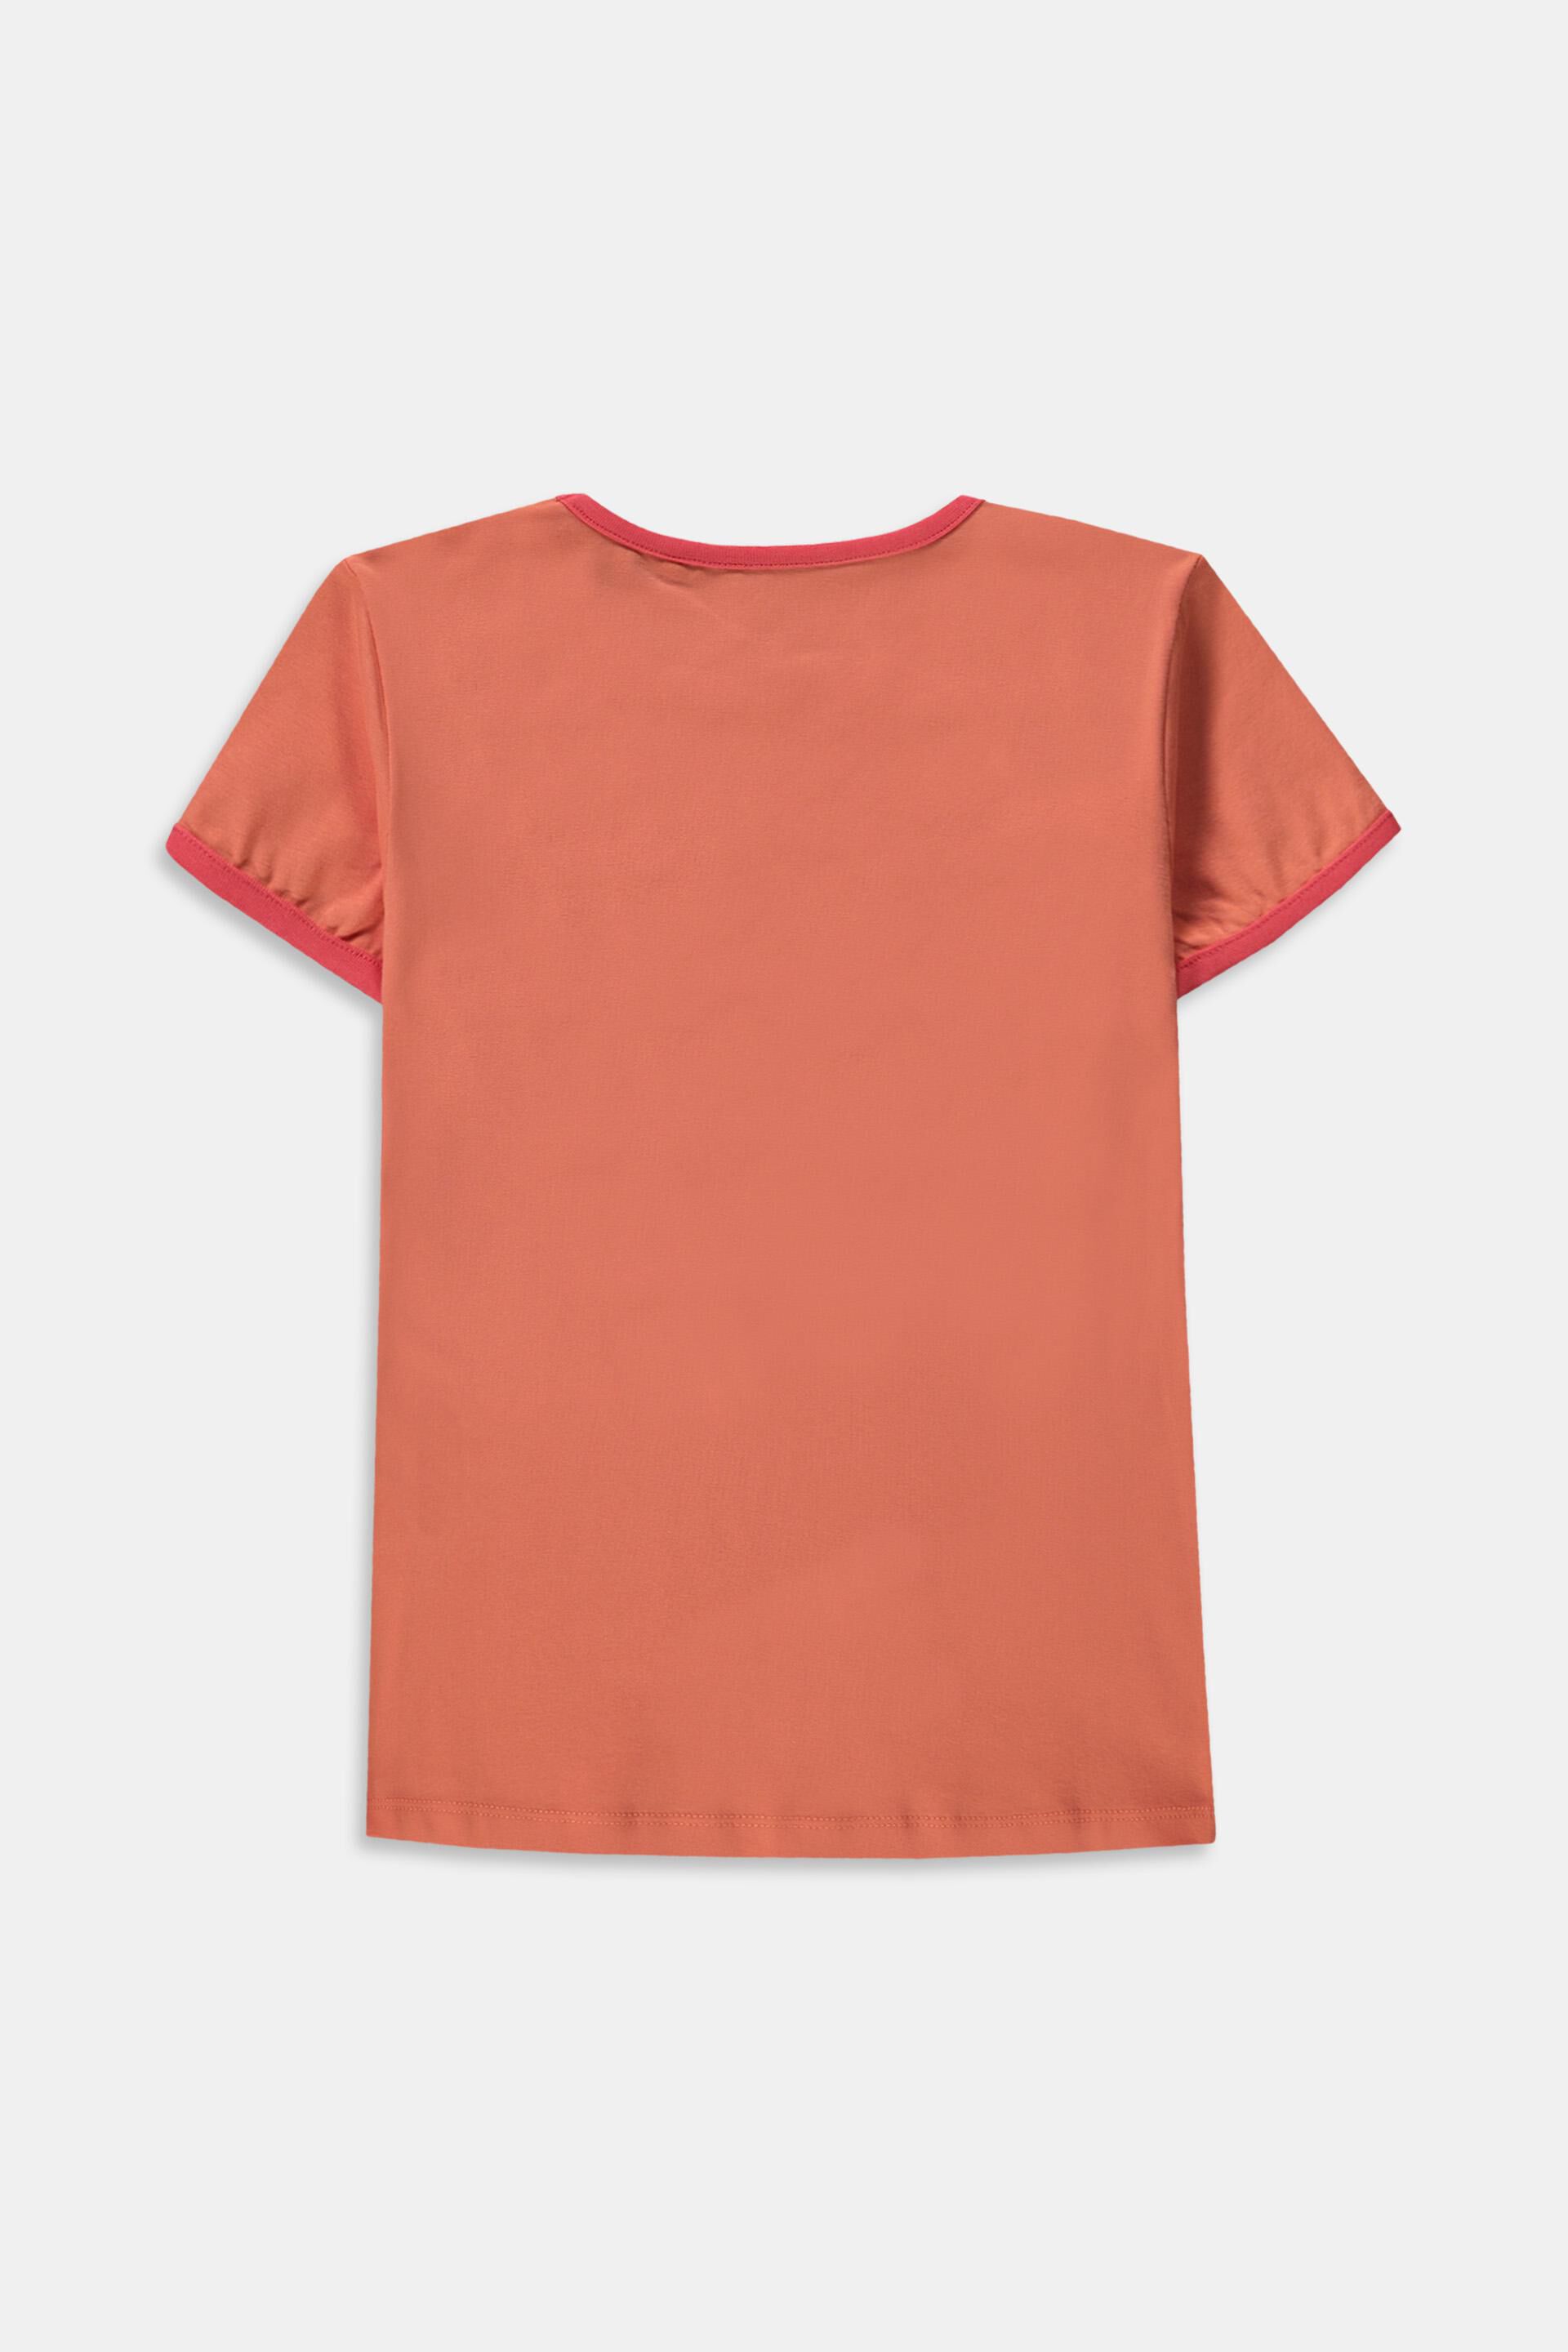 Tops und Blusen T-Shirts ONLY T-Shirts Only Kids T-Shirt Kinder Mädchen Shirts 